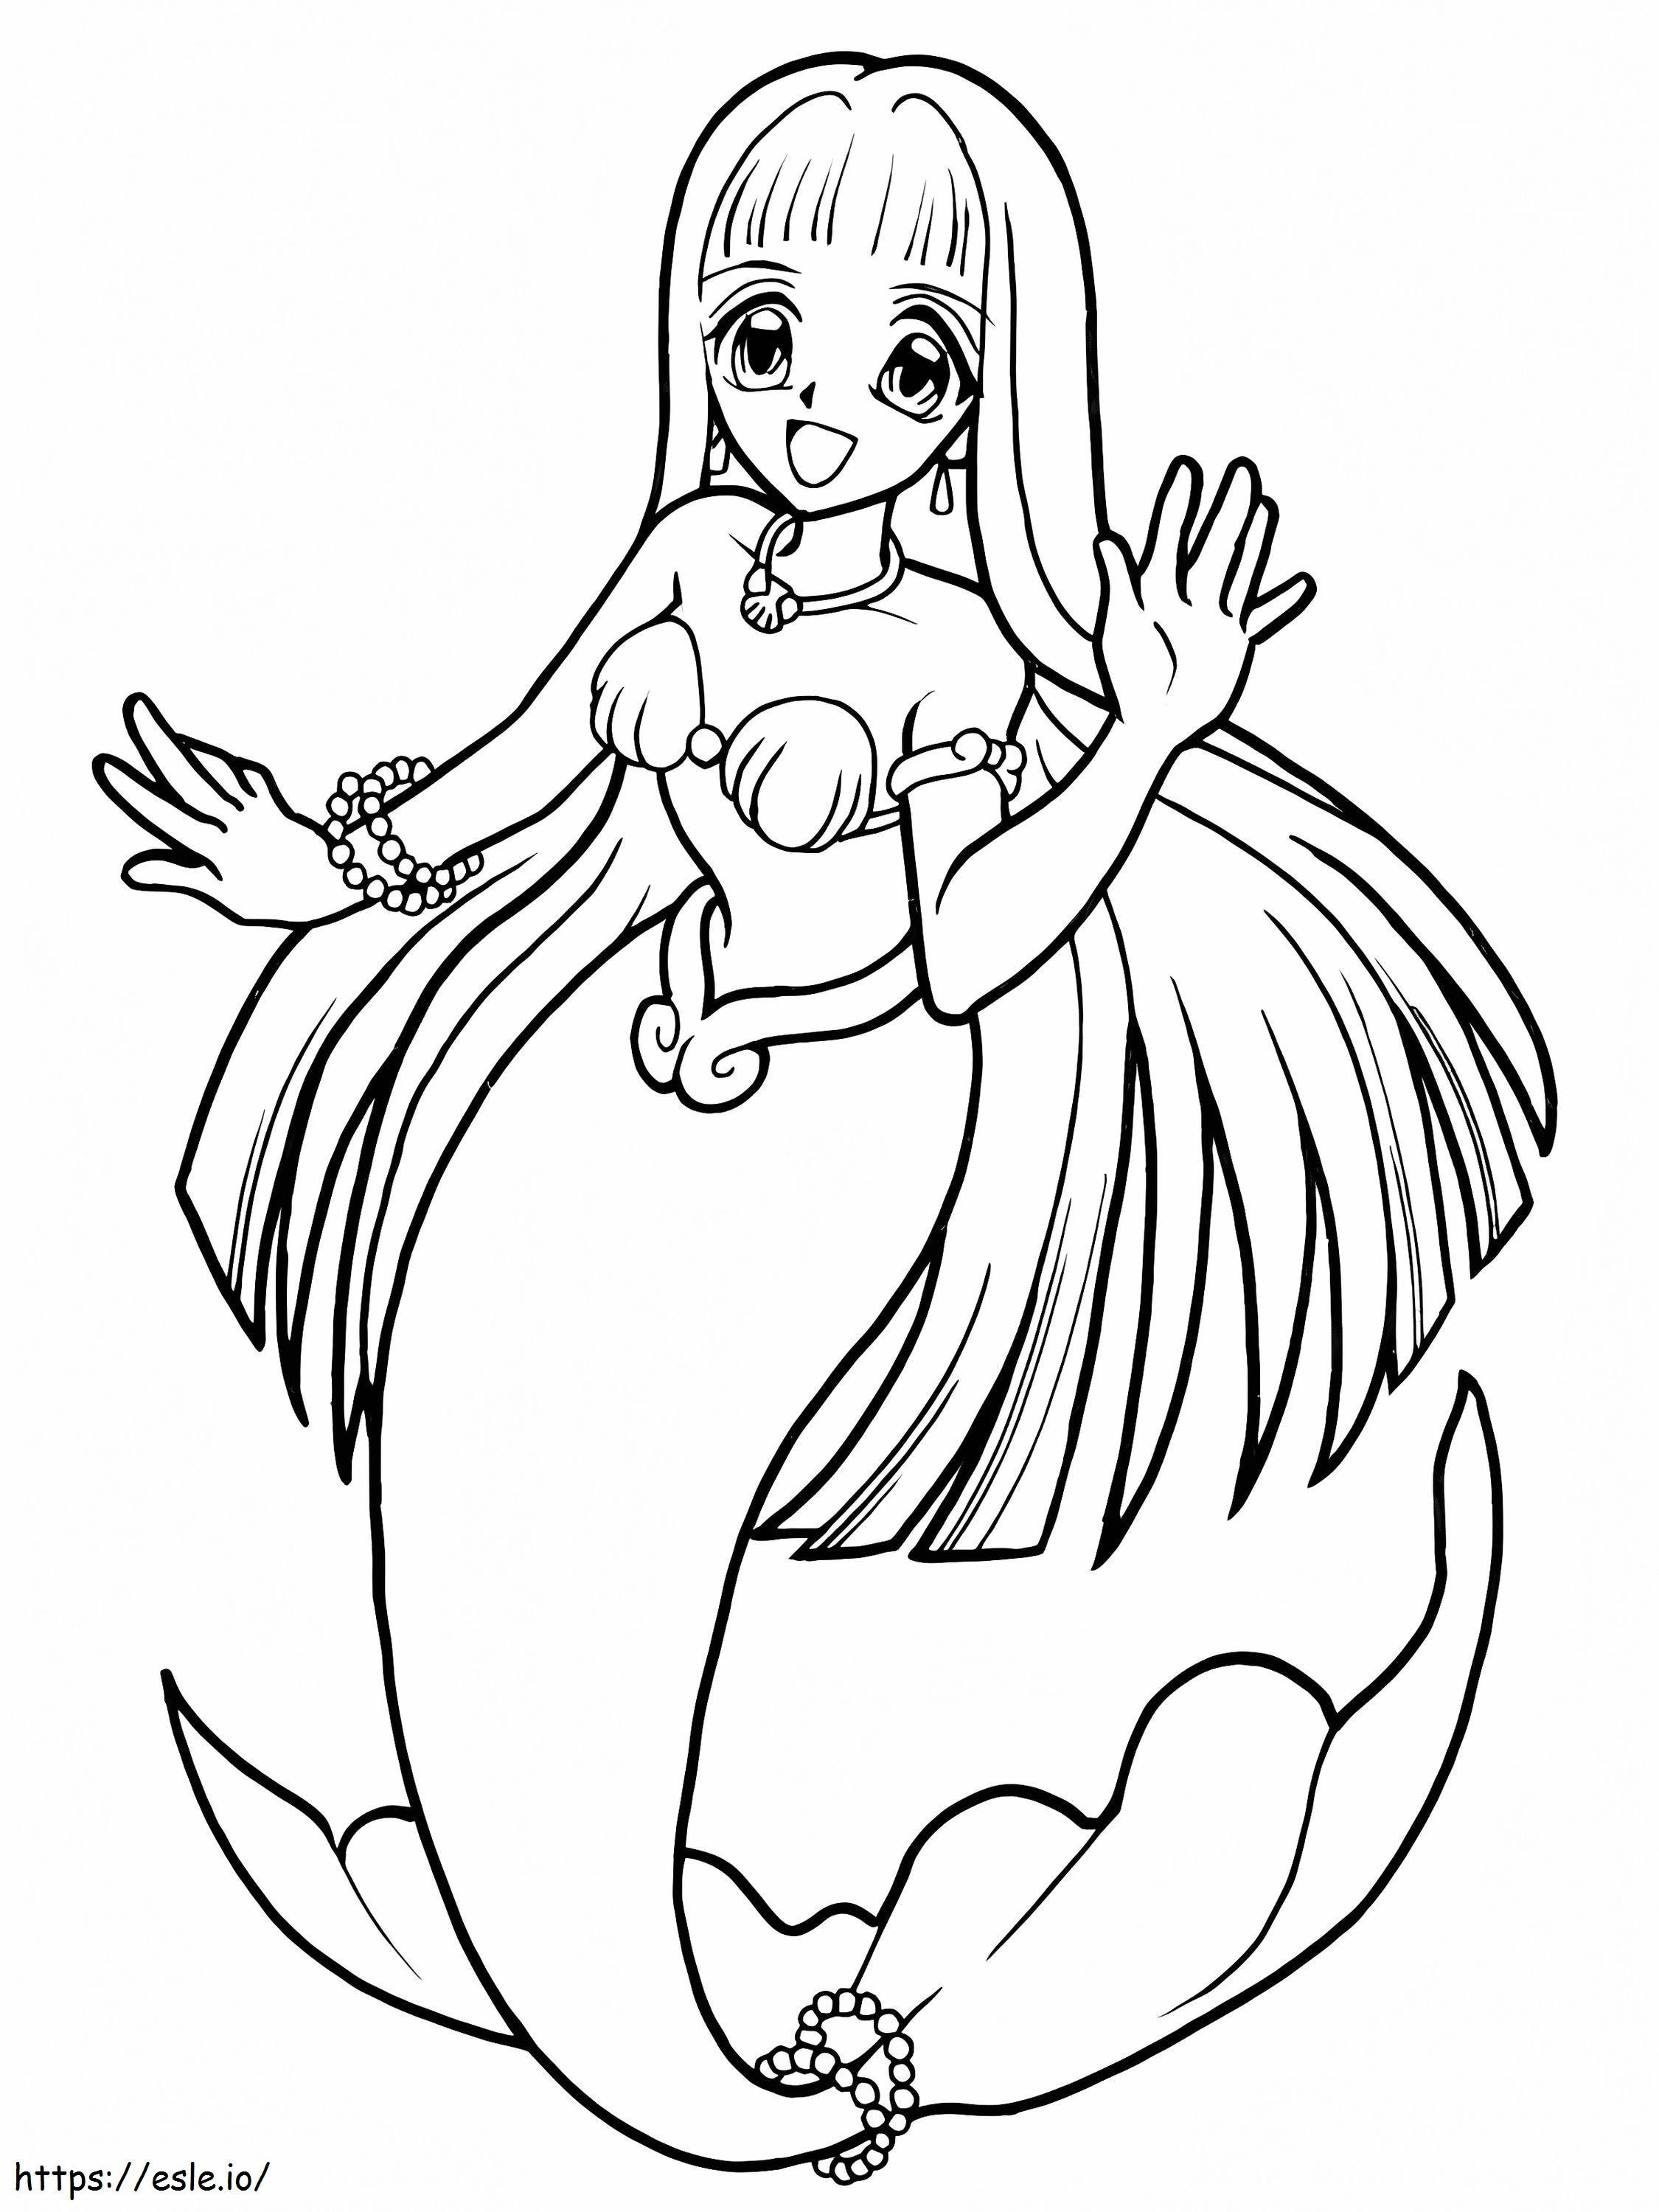 Friendly Mermaid coloring page